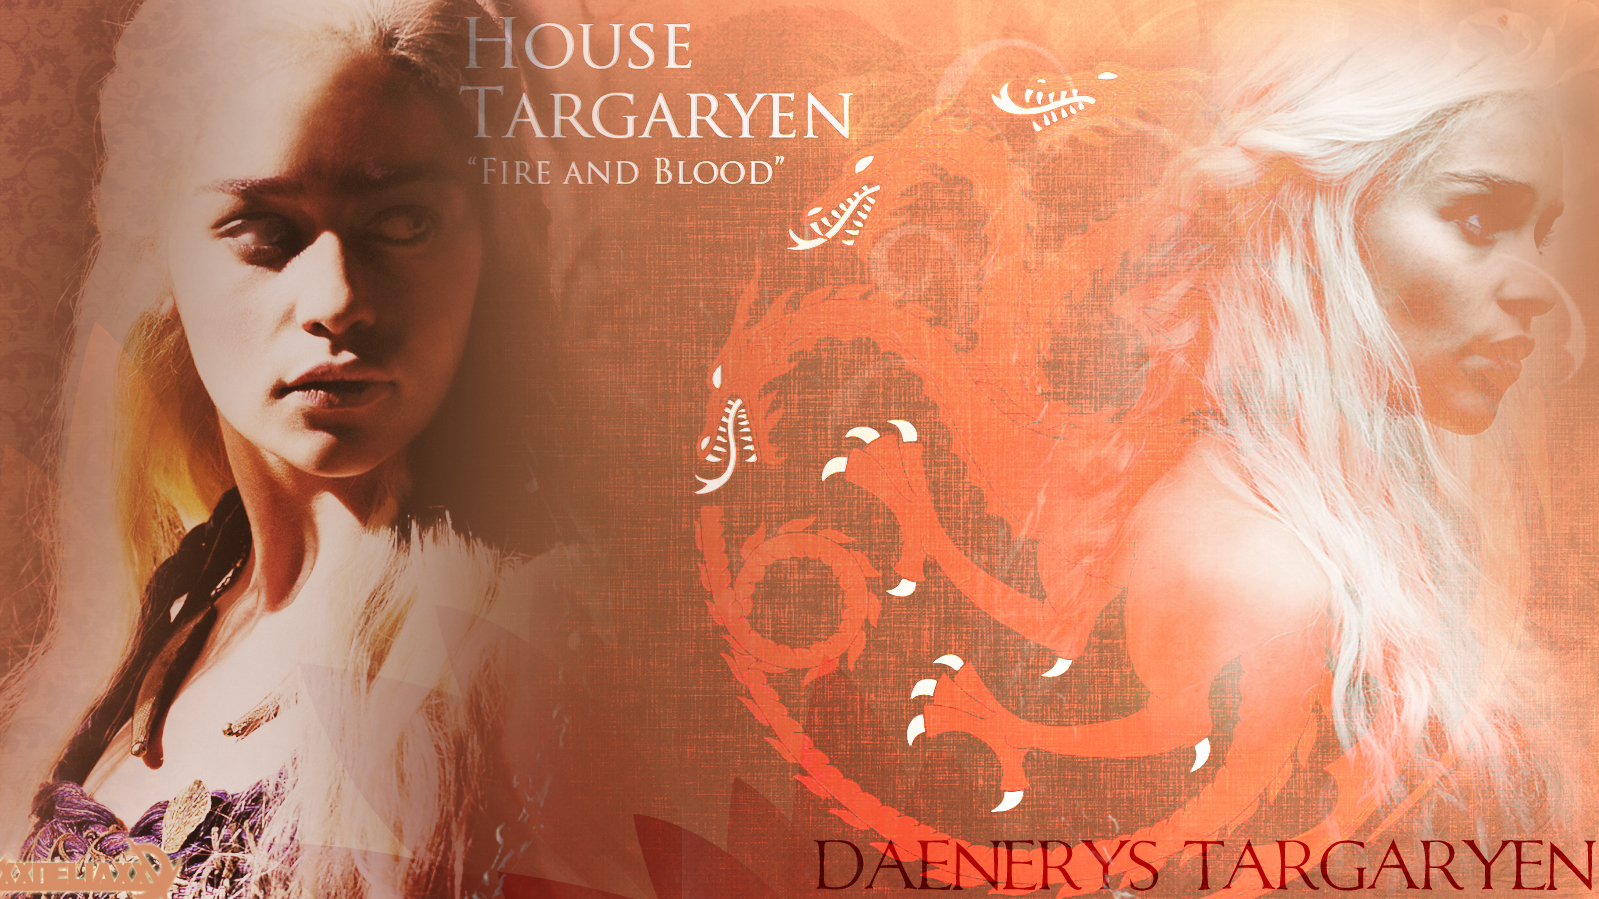 Daenerys Targaryen Wallpaper Hd Images Pictures   Becuo